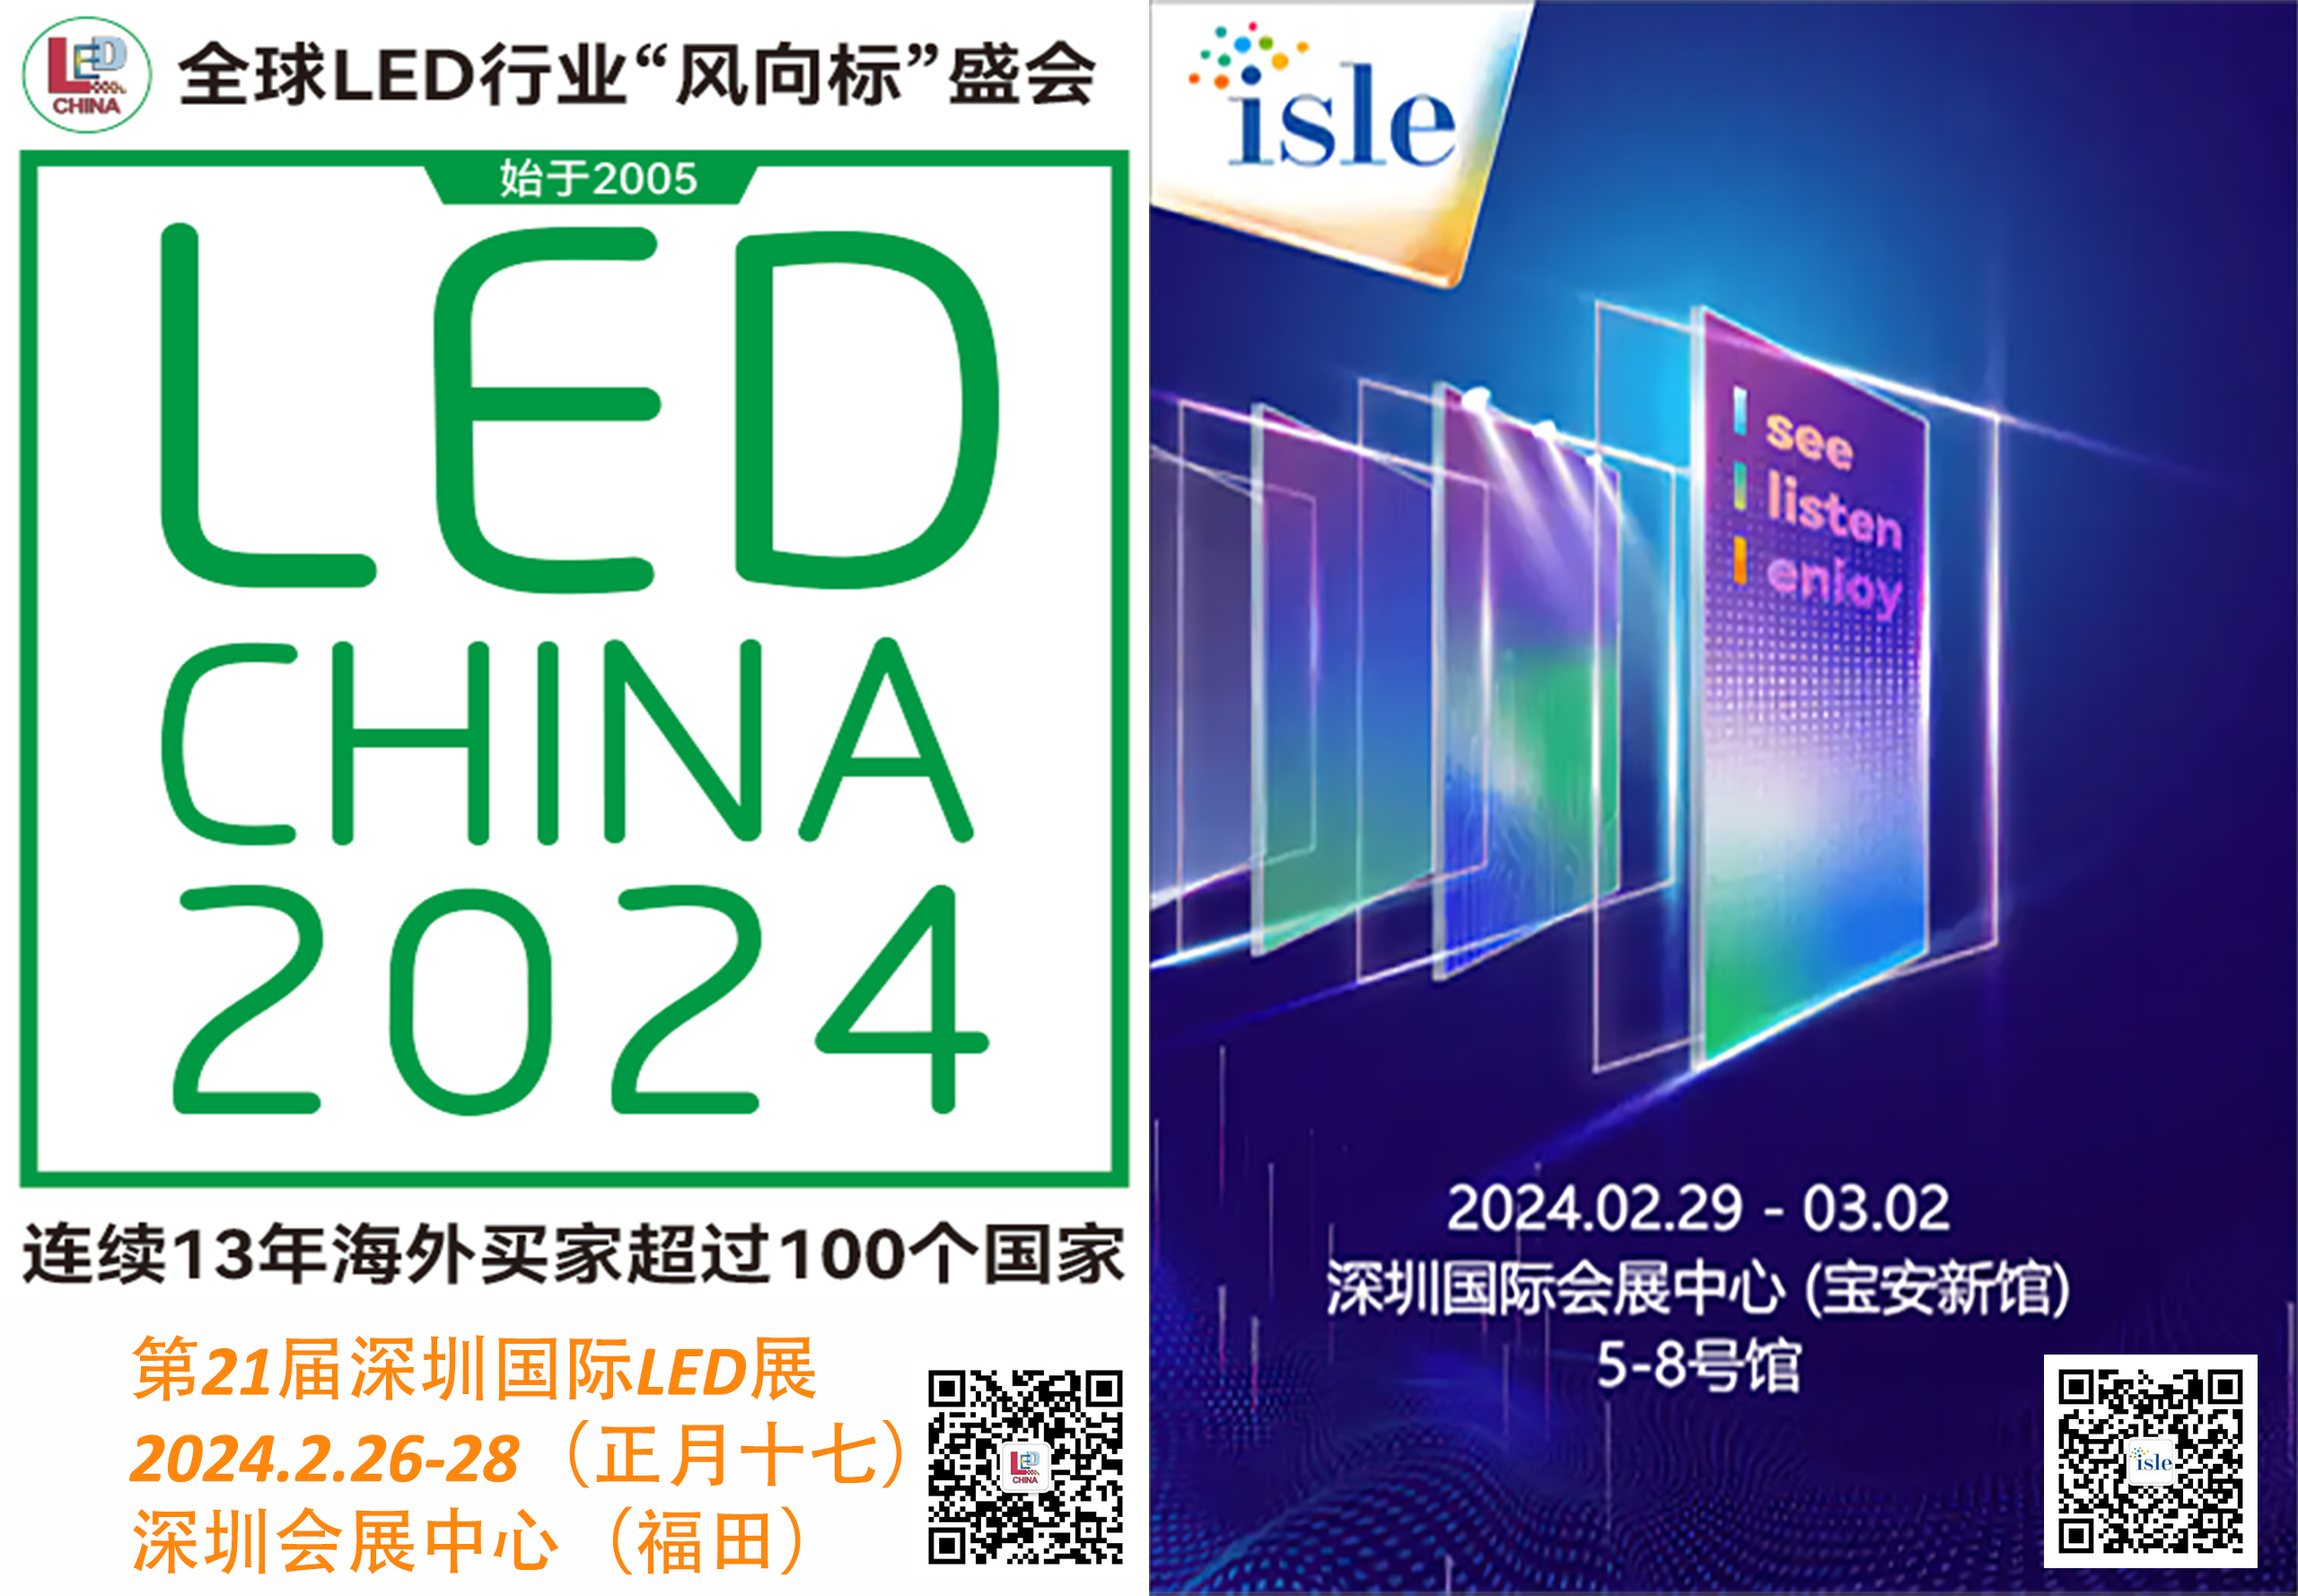 Big week next week in Shenzhen for the LED digital signage industry!